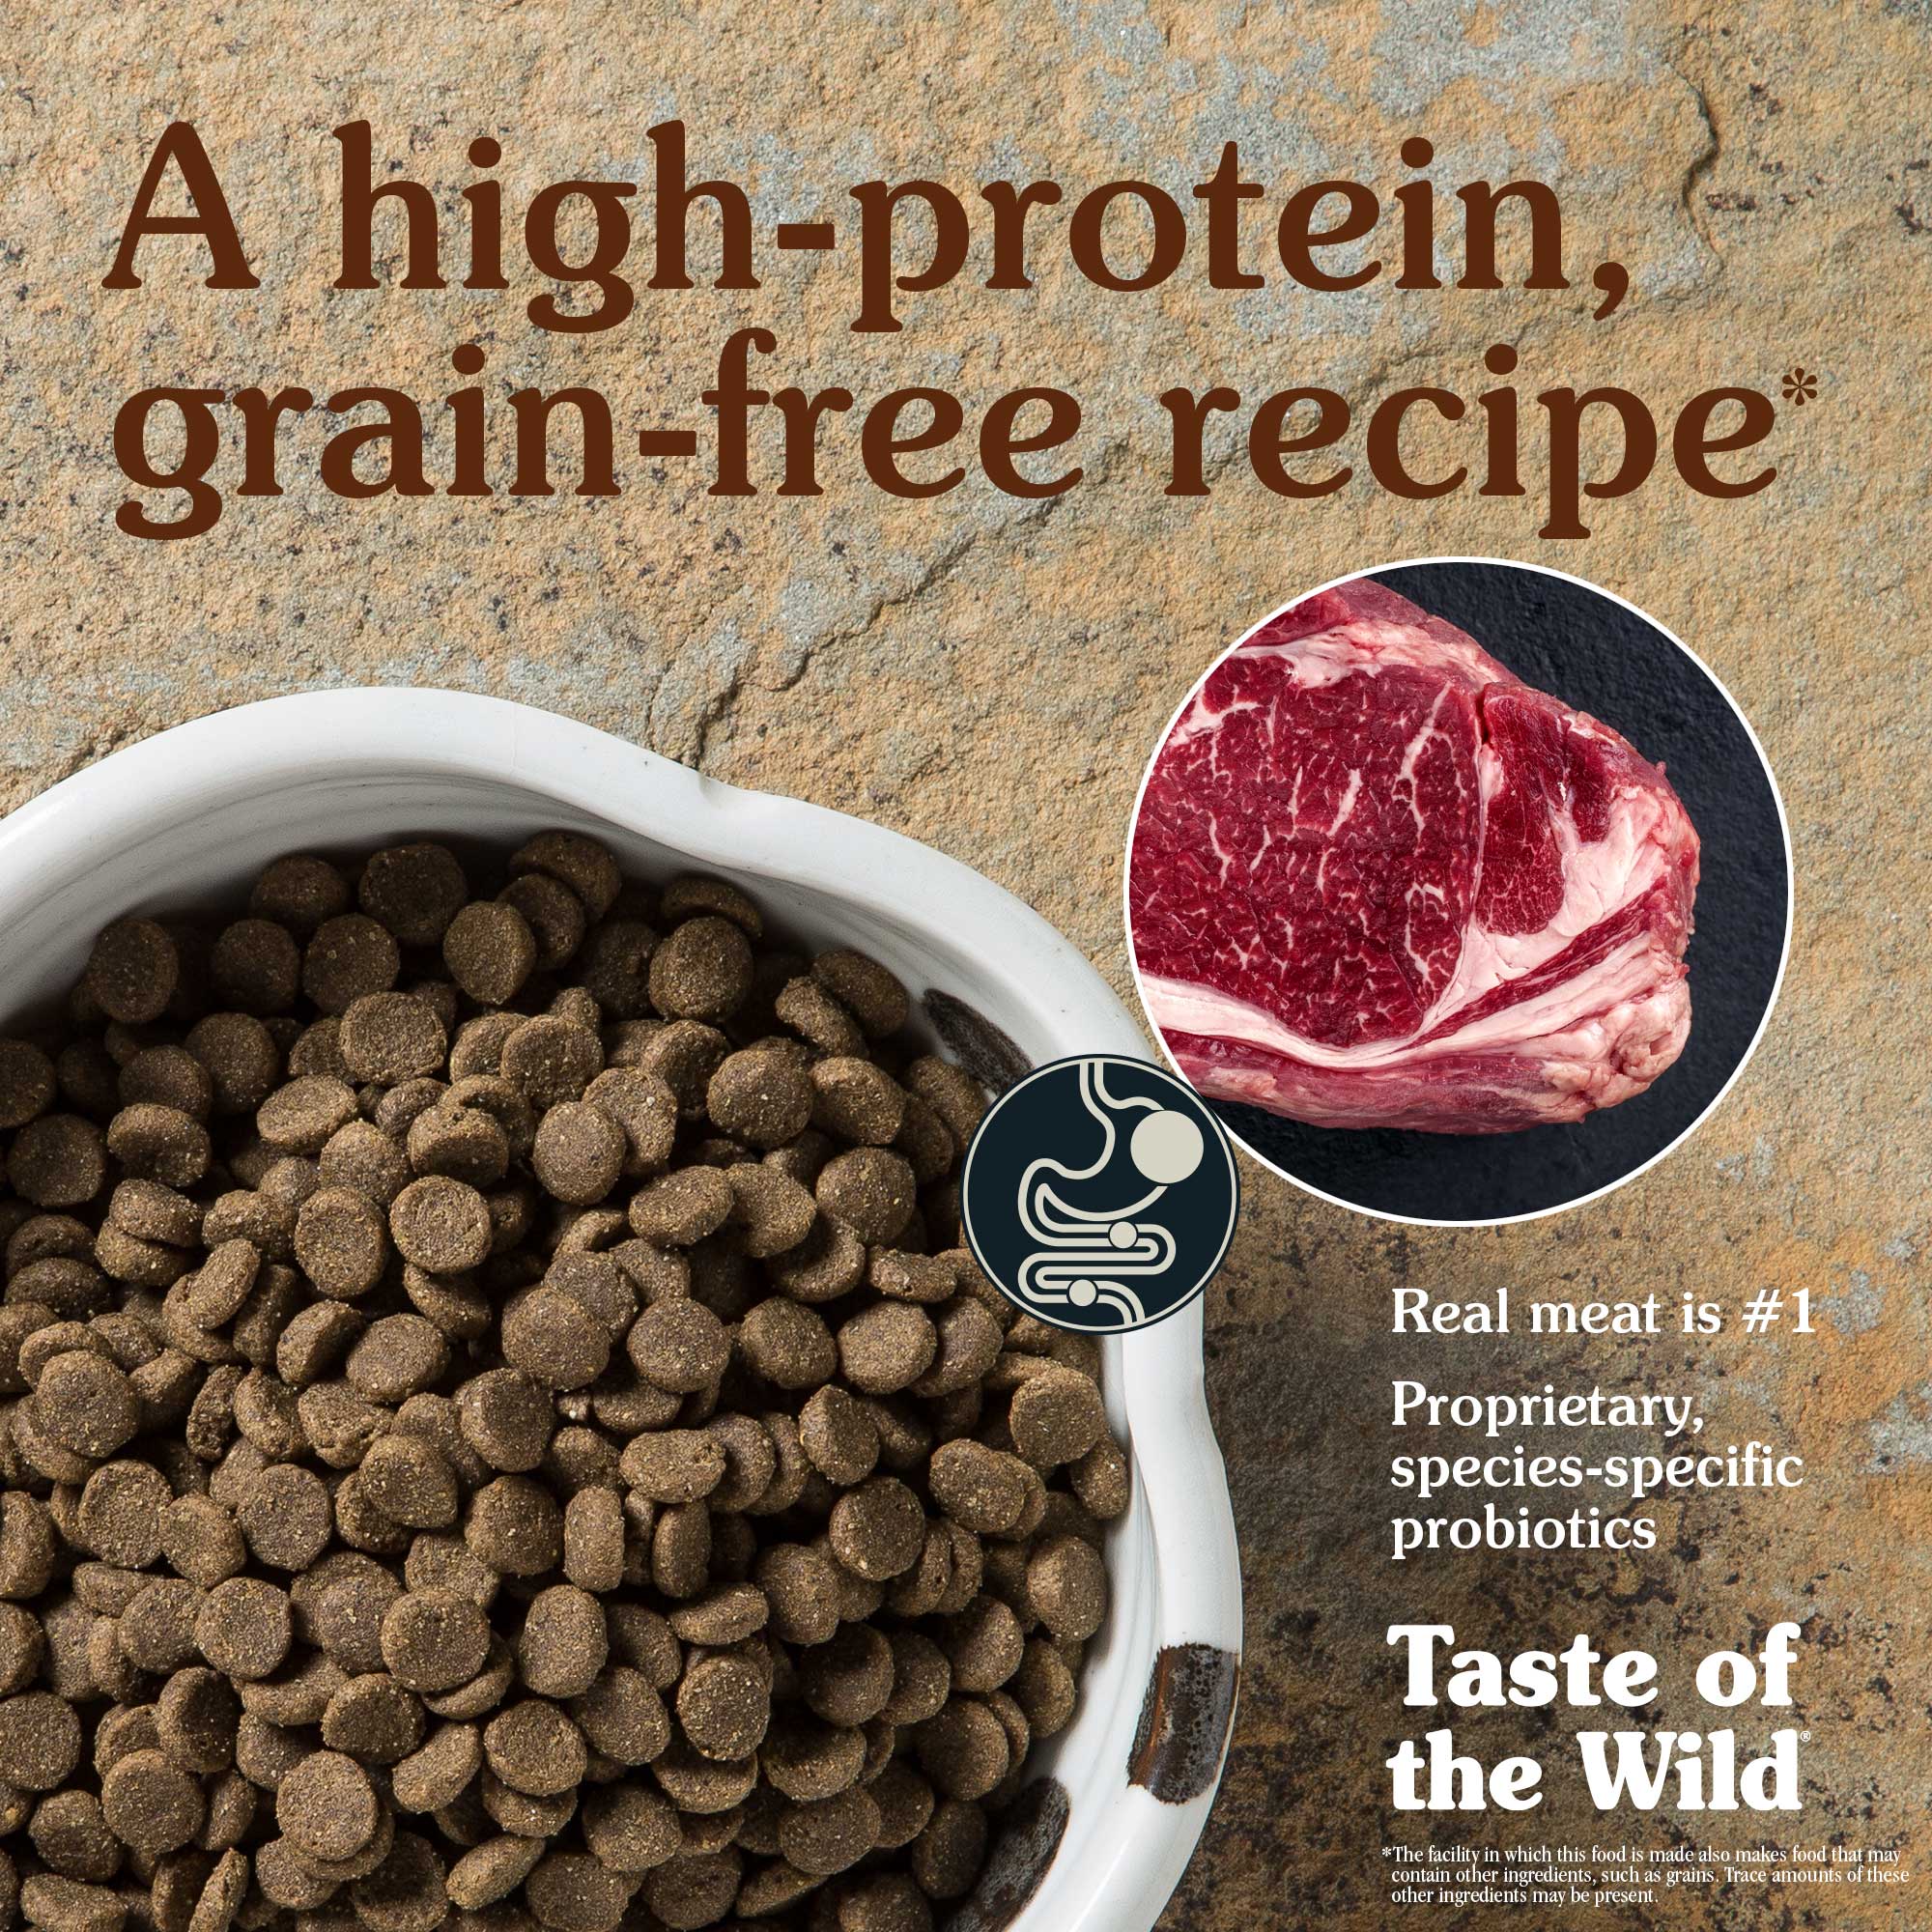 Taste Of The Wild High Prairie Grain-Free Dog Food - Mutts & Co.